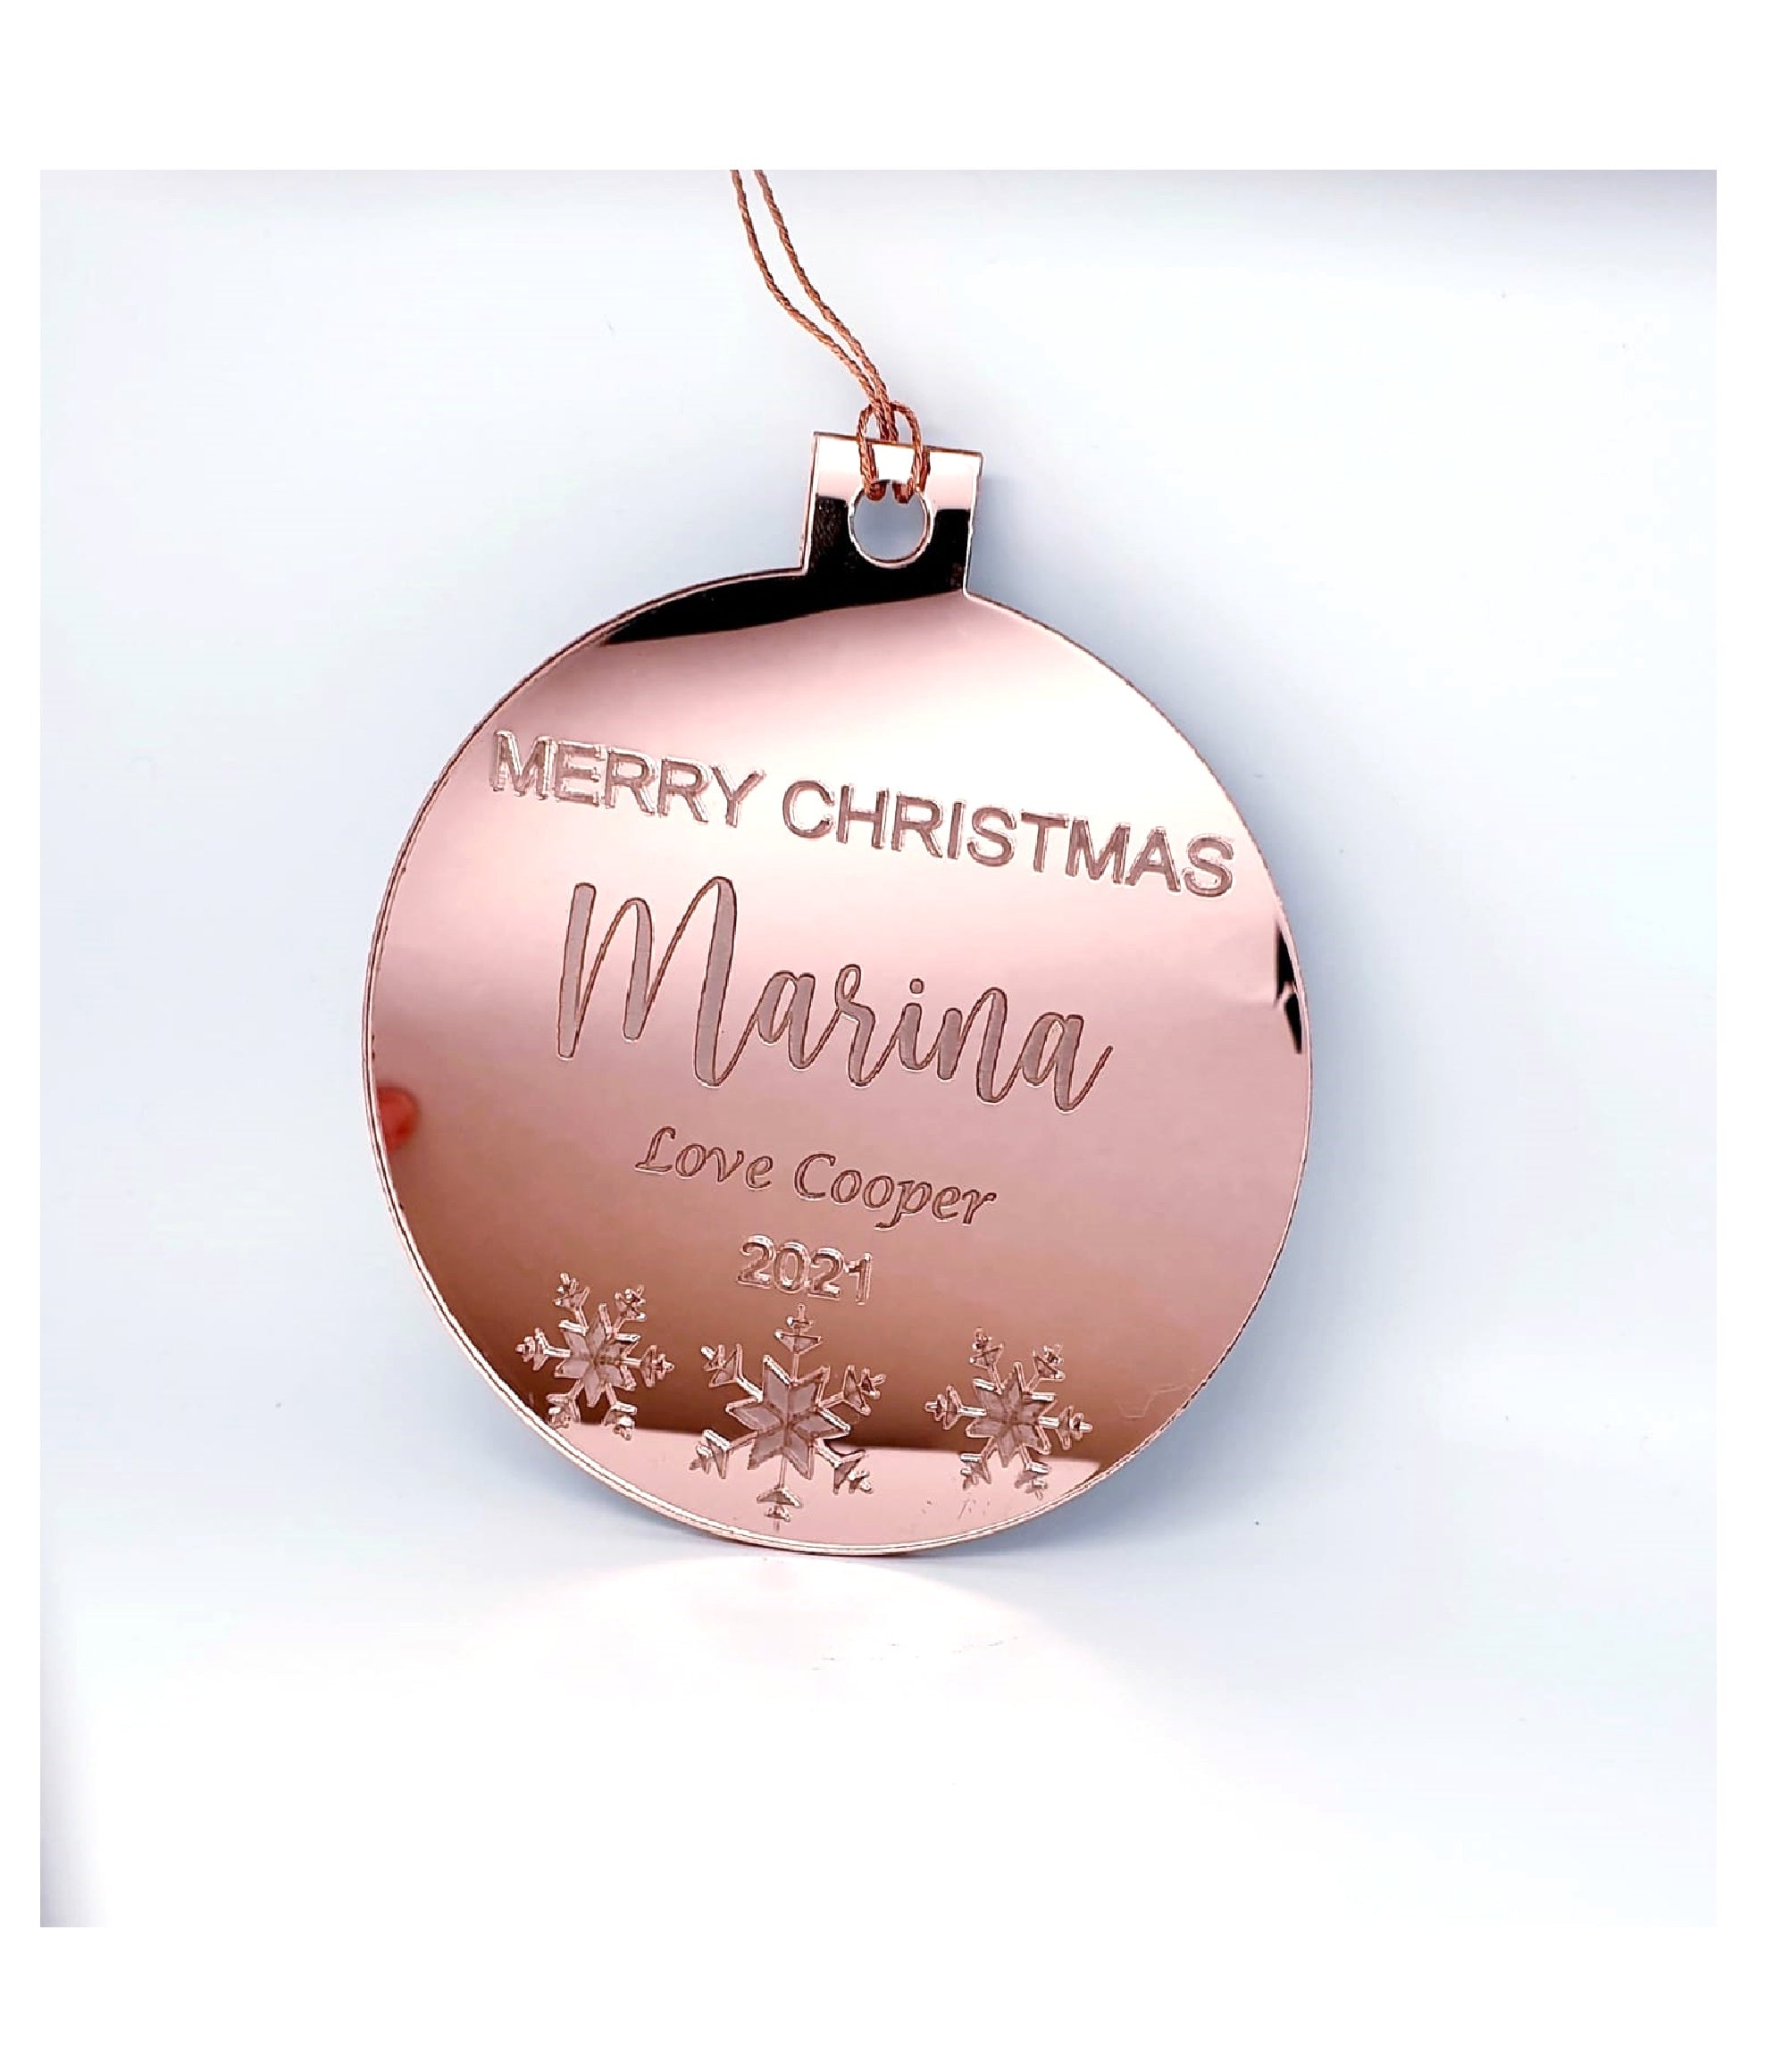 Merry Christmas + Name + Love + Name + 2021 Snowflake Ornament